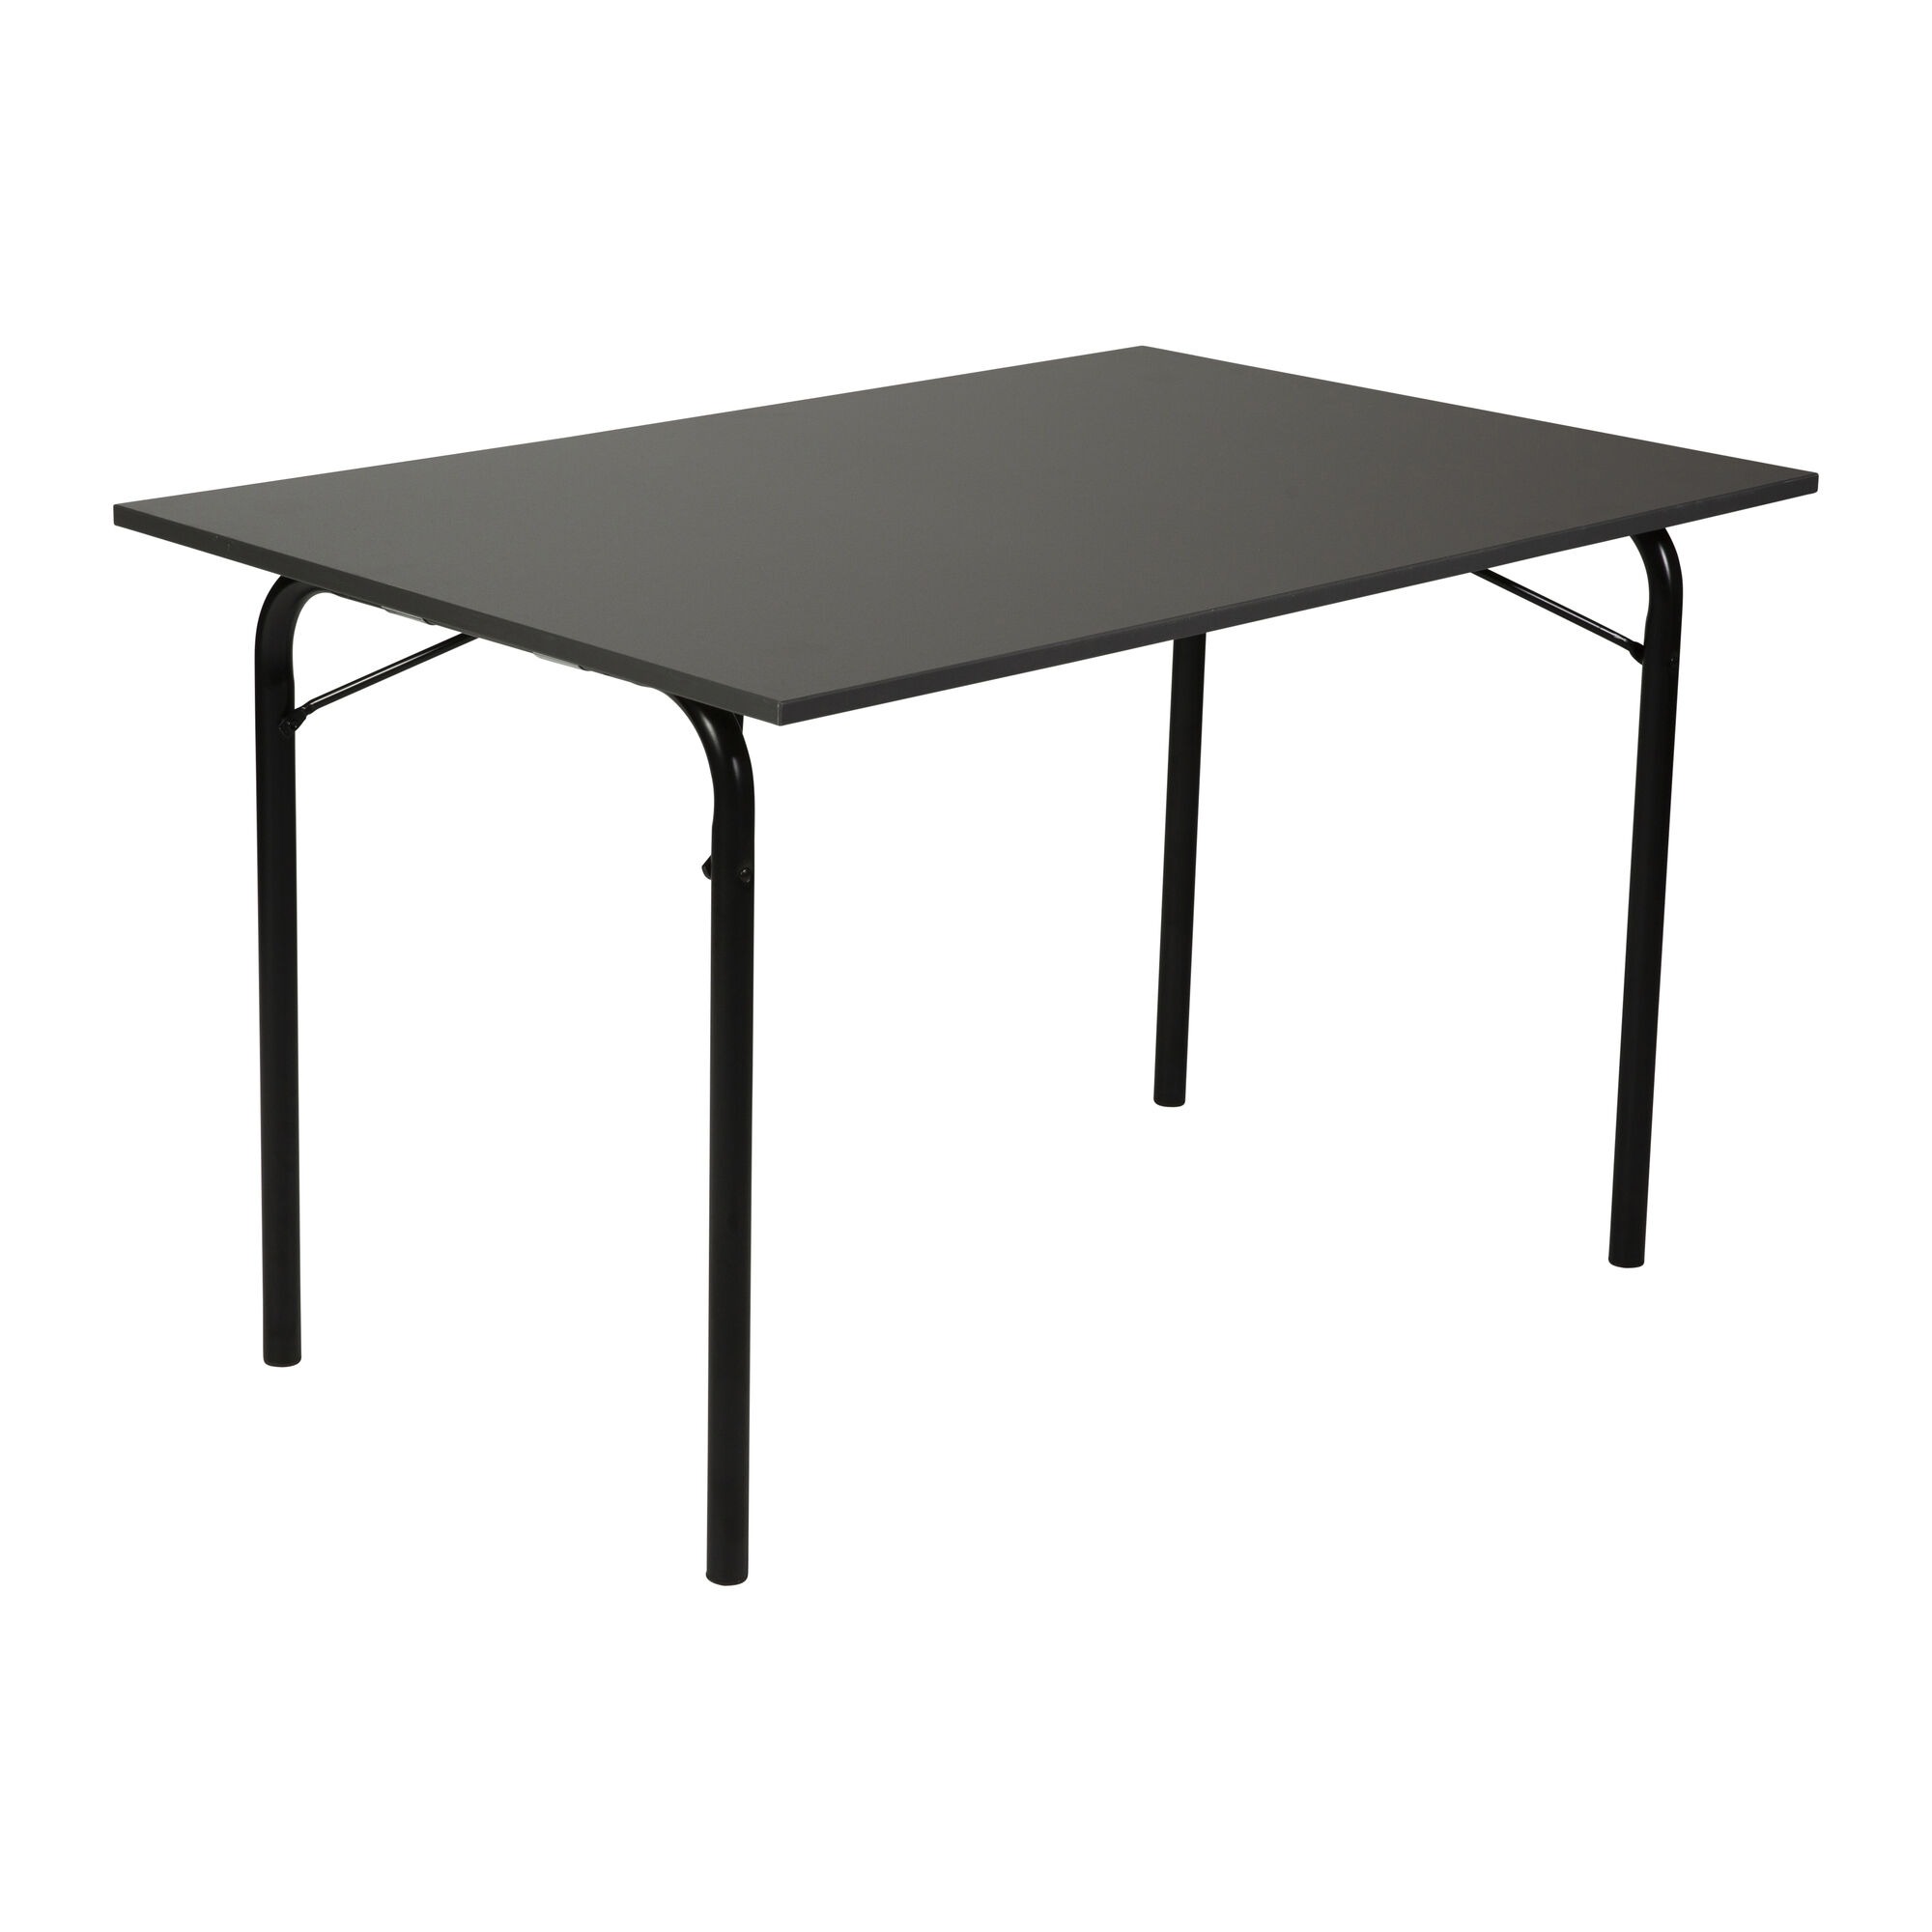 U-Budget Table - Folding Table